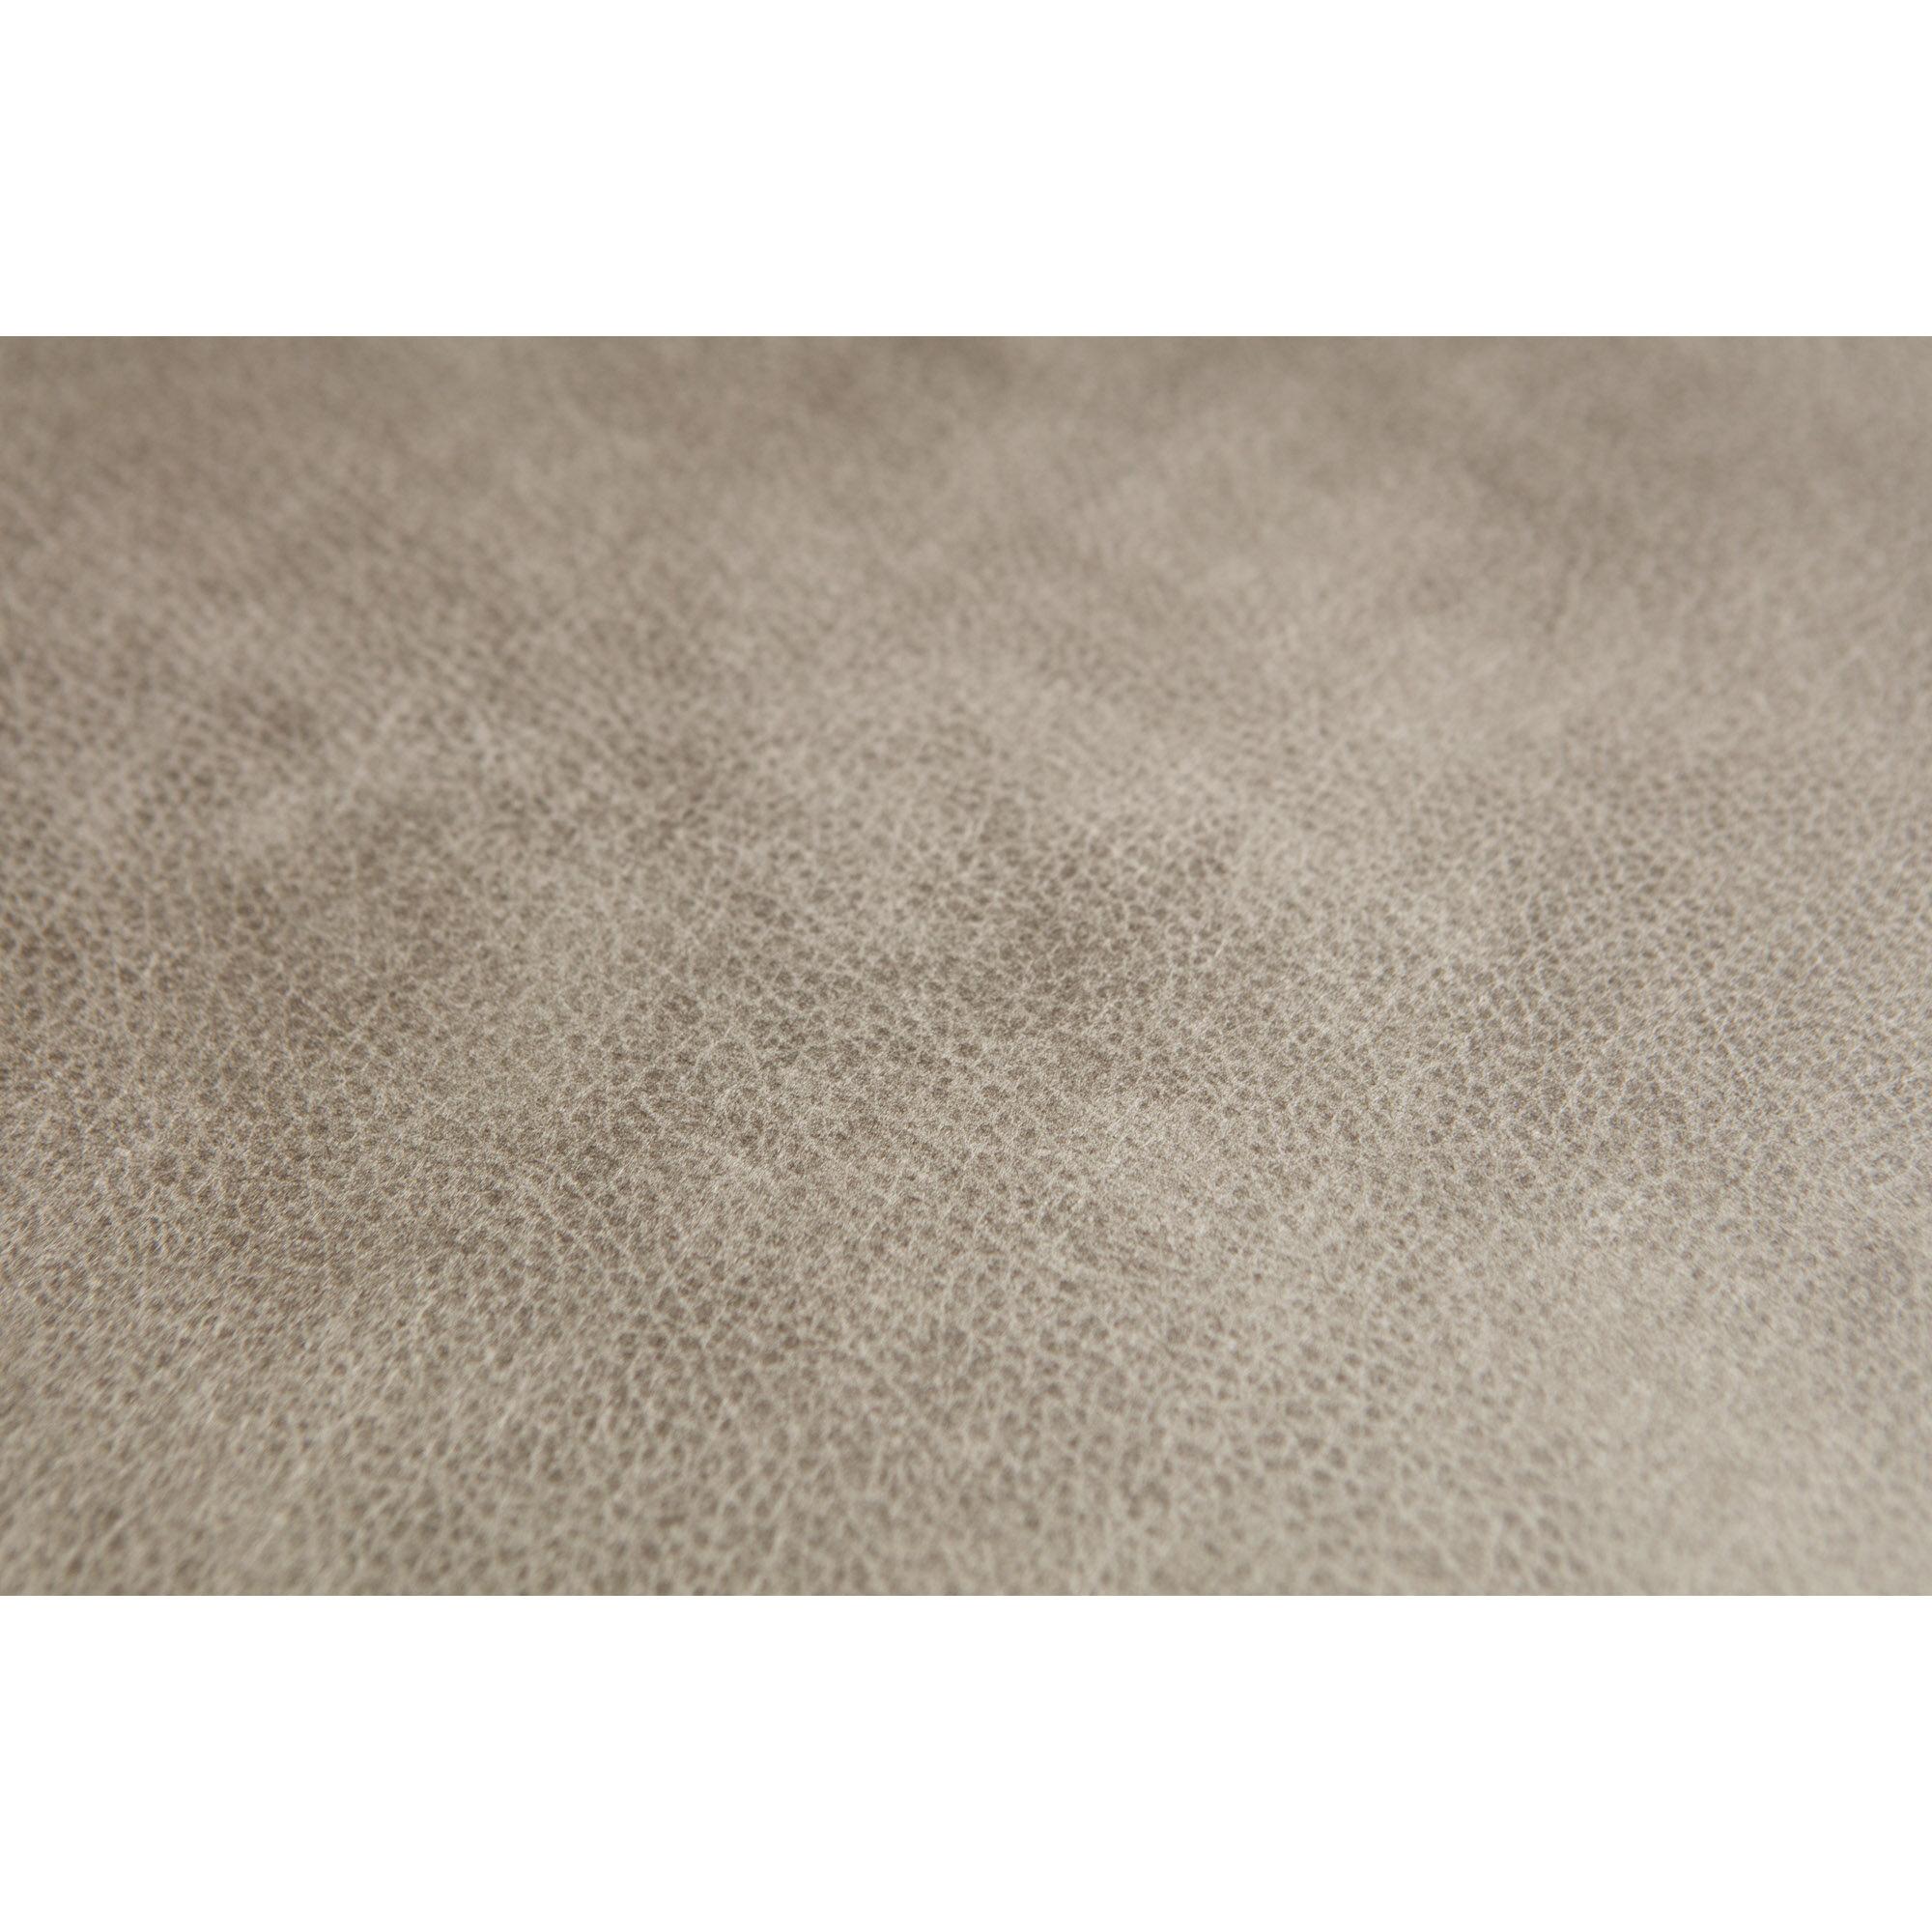  Rodeo 2,5-pers Sofa Elephant Skin - Beige/Taupe fra BePureHome i Elephant Skin (Varenr: 800542-105)